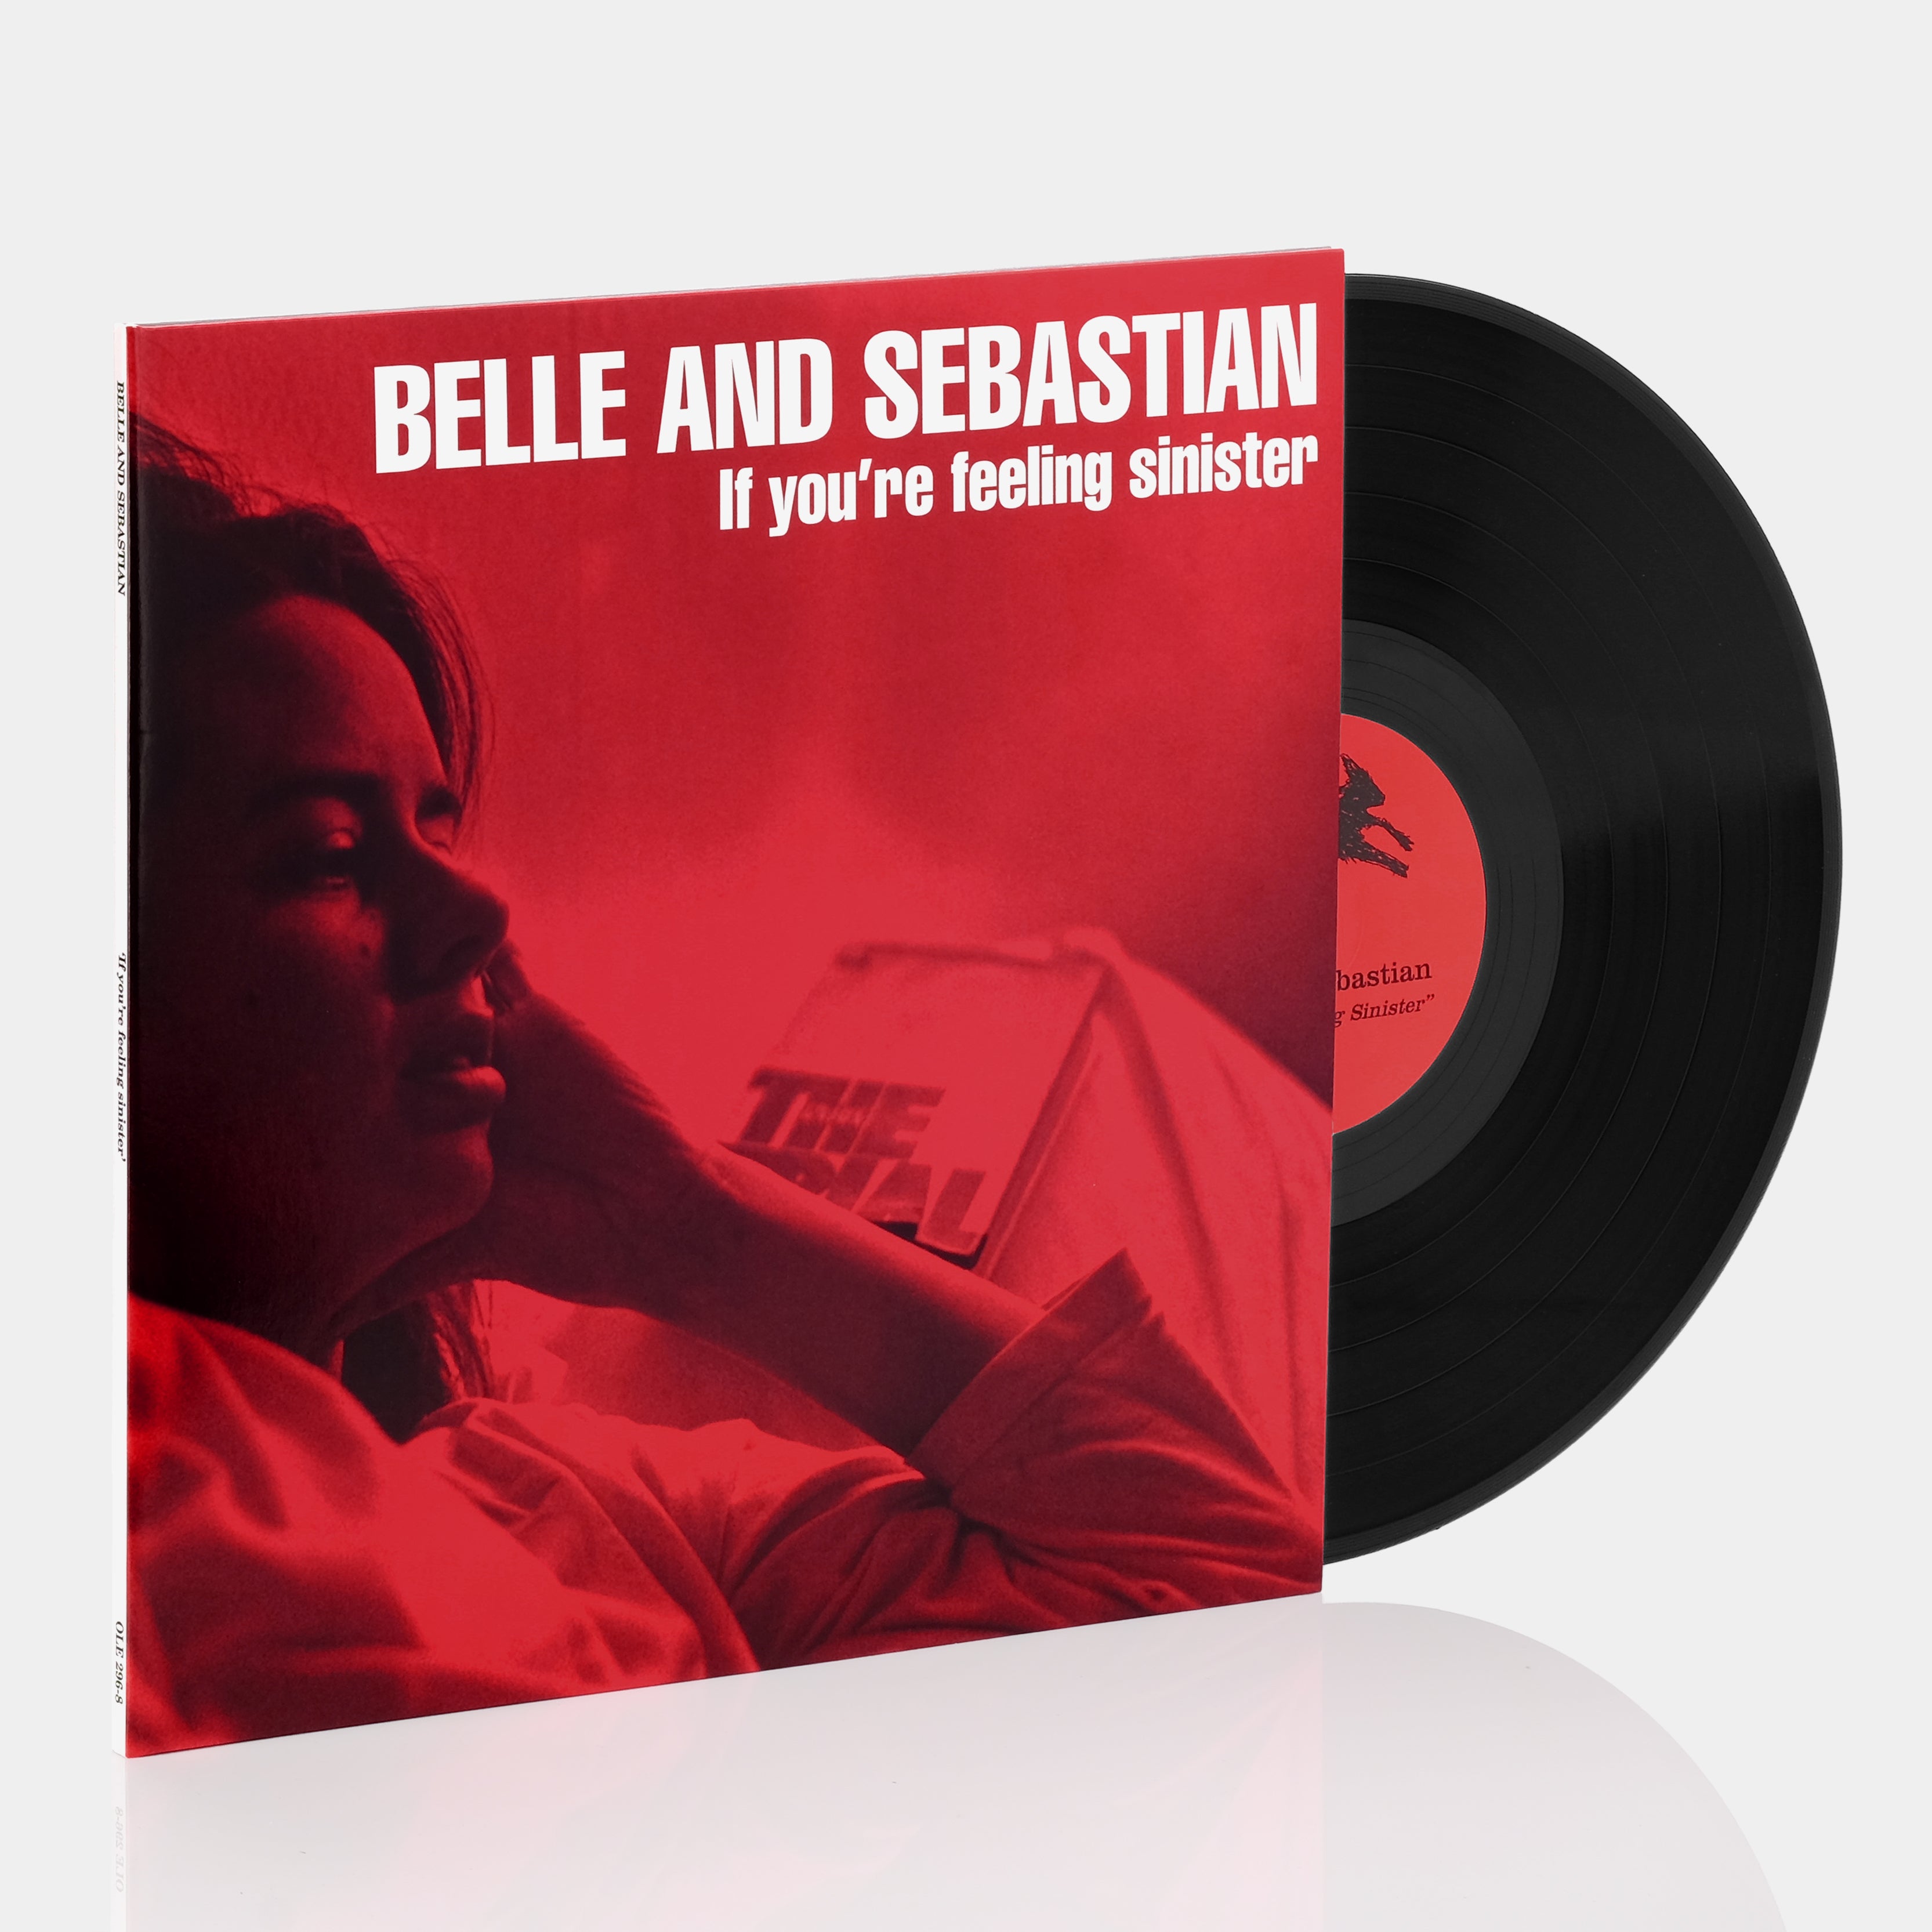 Belle And Sebastian - If You're Feeling Sinister LP Vinyl Record